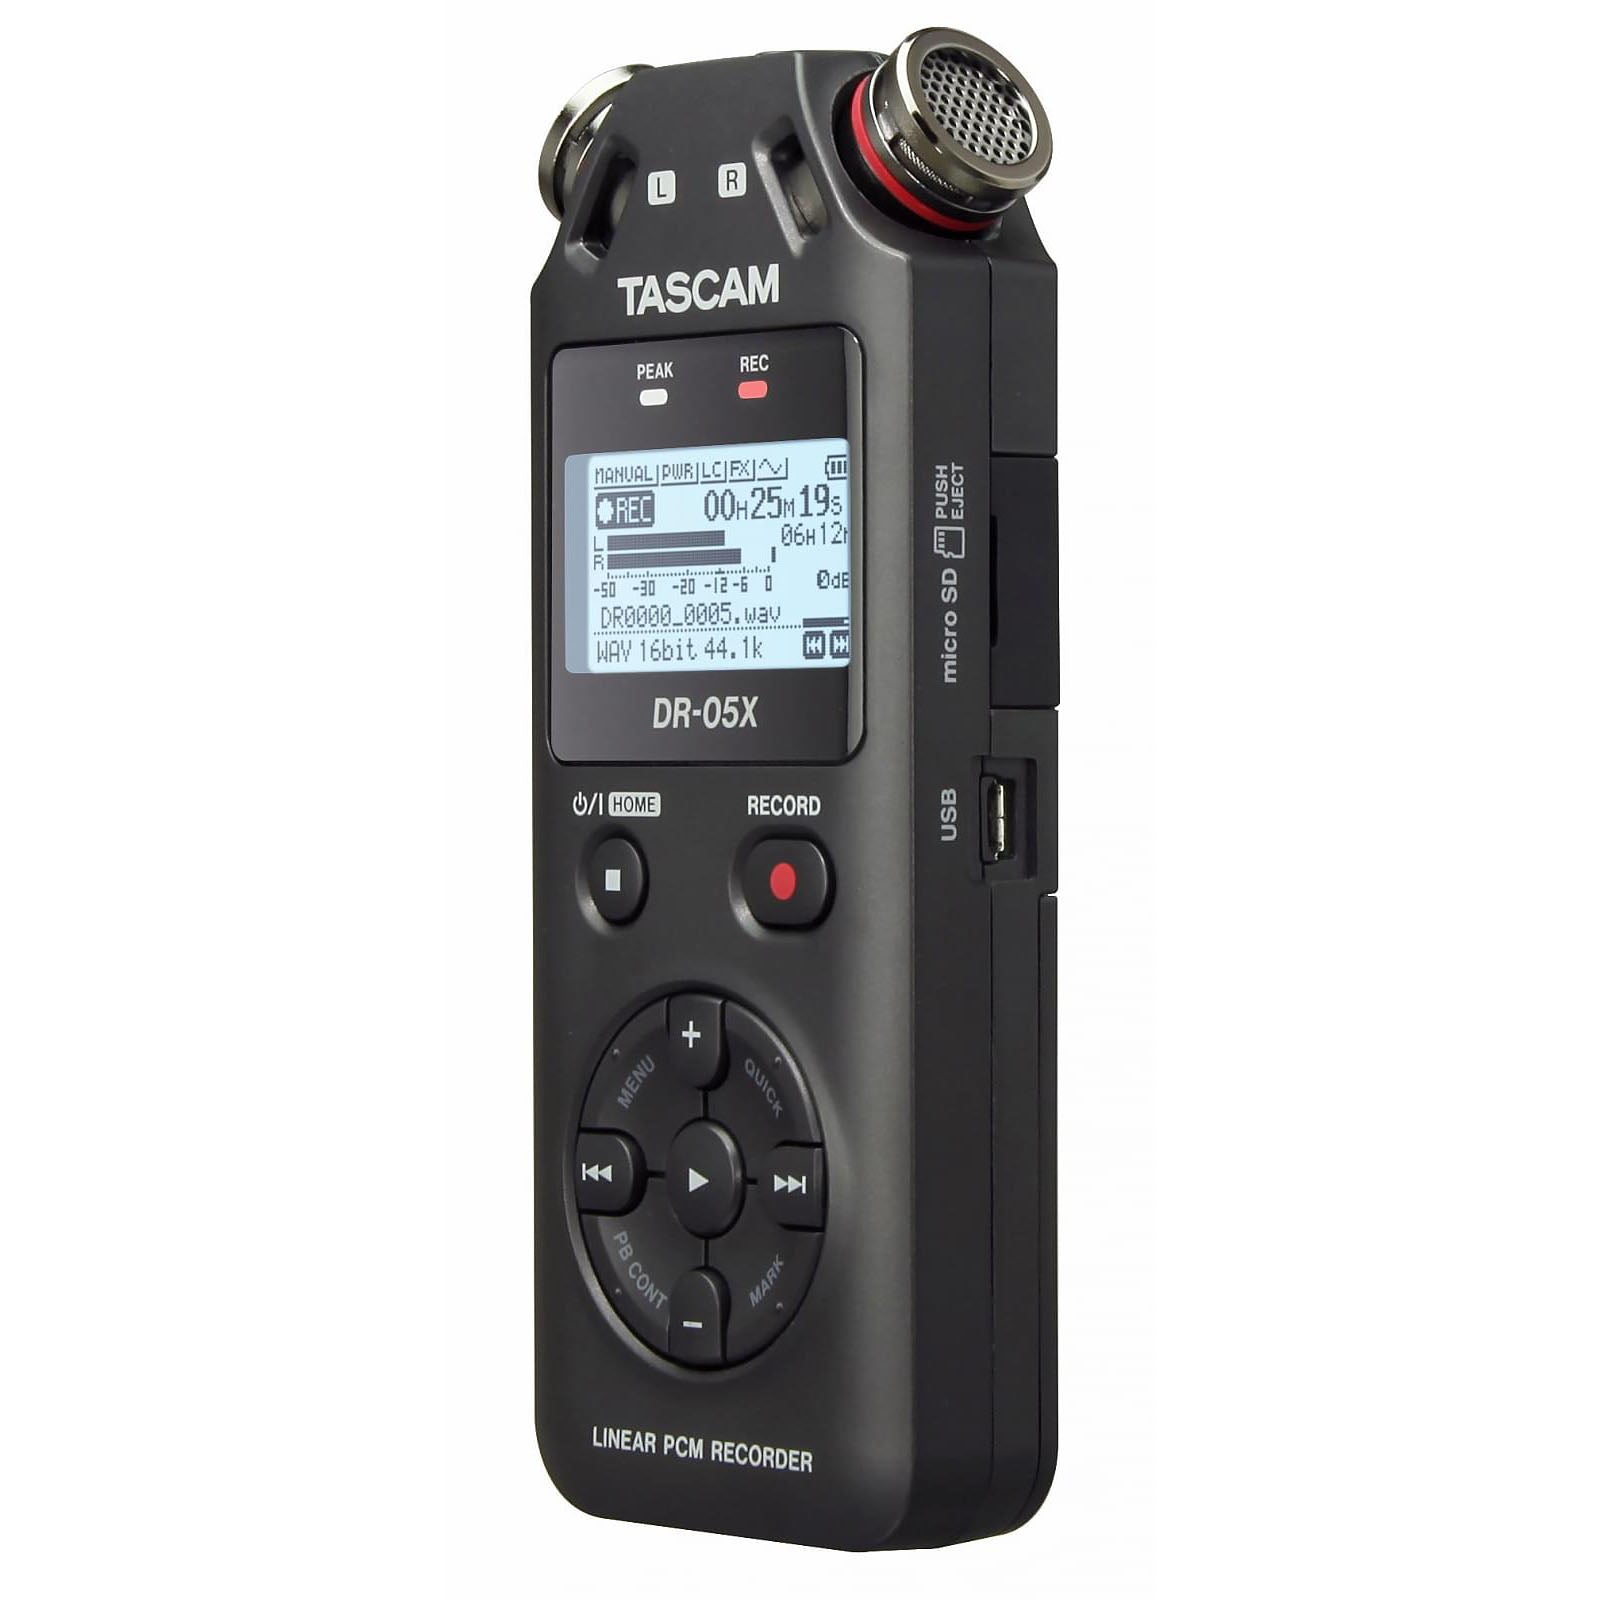 Tascam DR-05X portable audio recorder